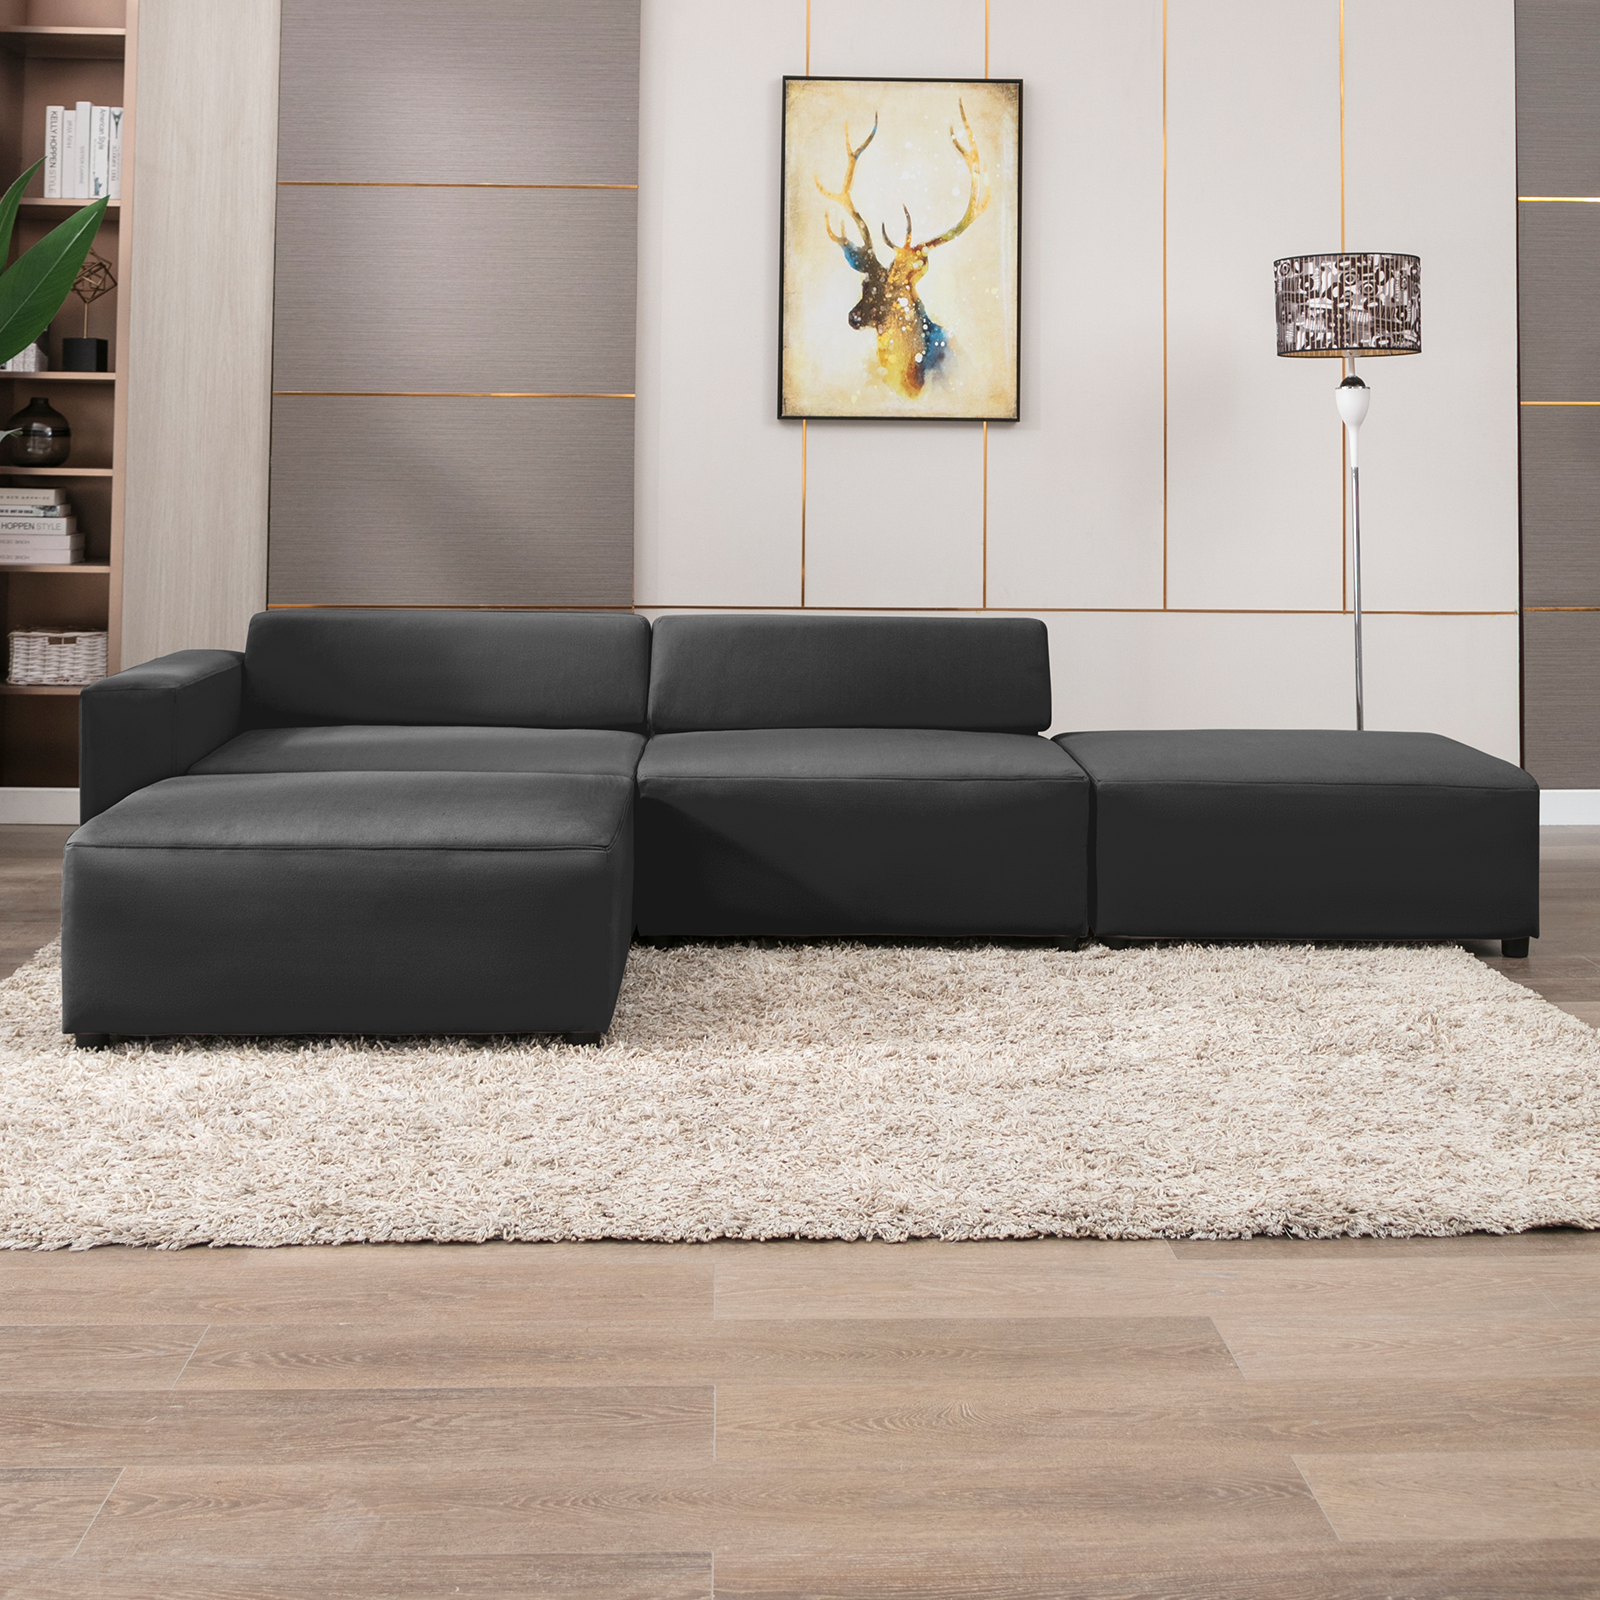 Mjkone L-Shape Reversible Upholstery Modular Sofa with Ottoman